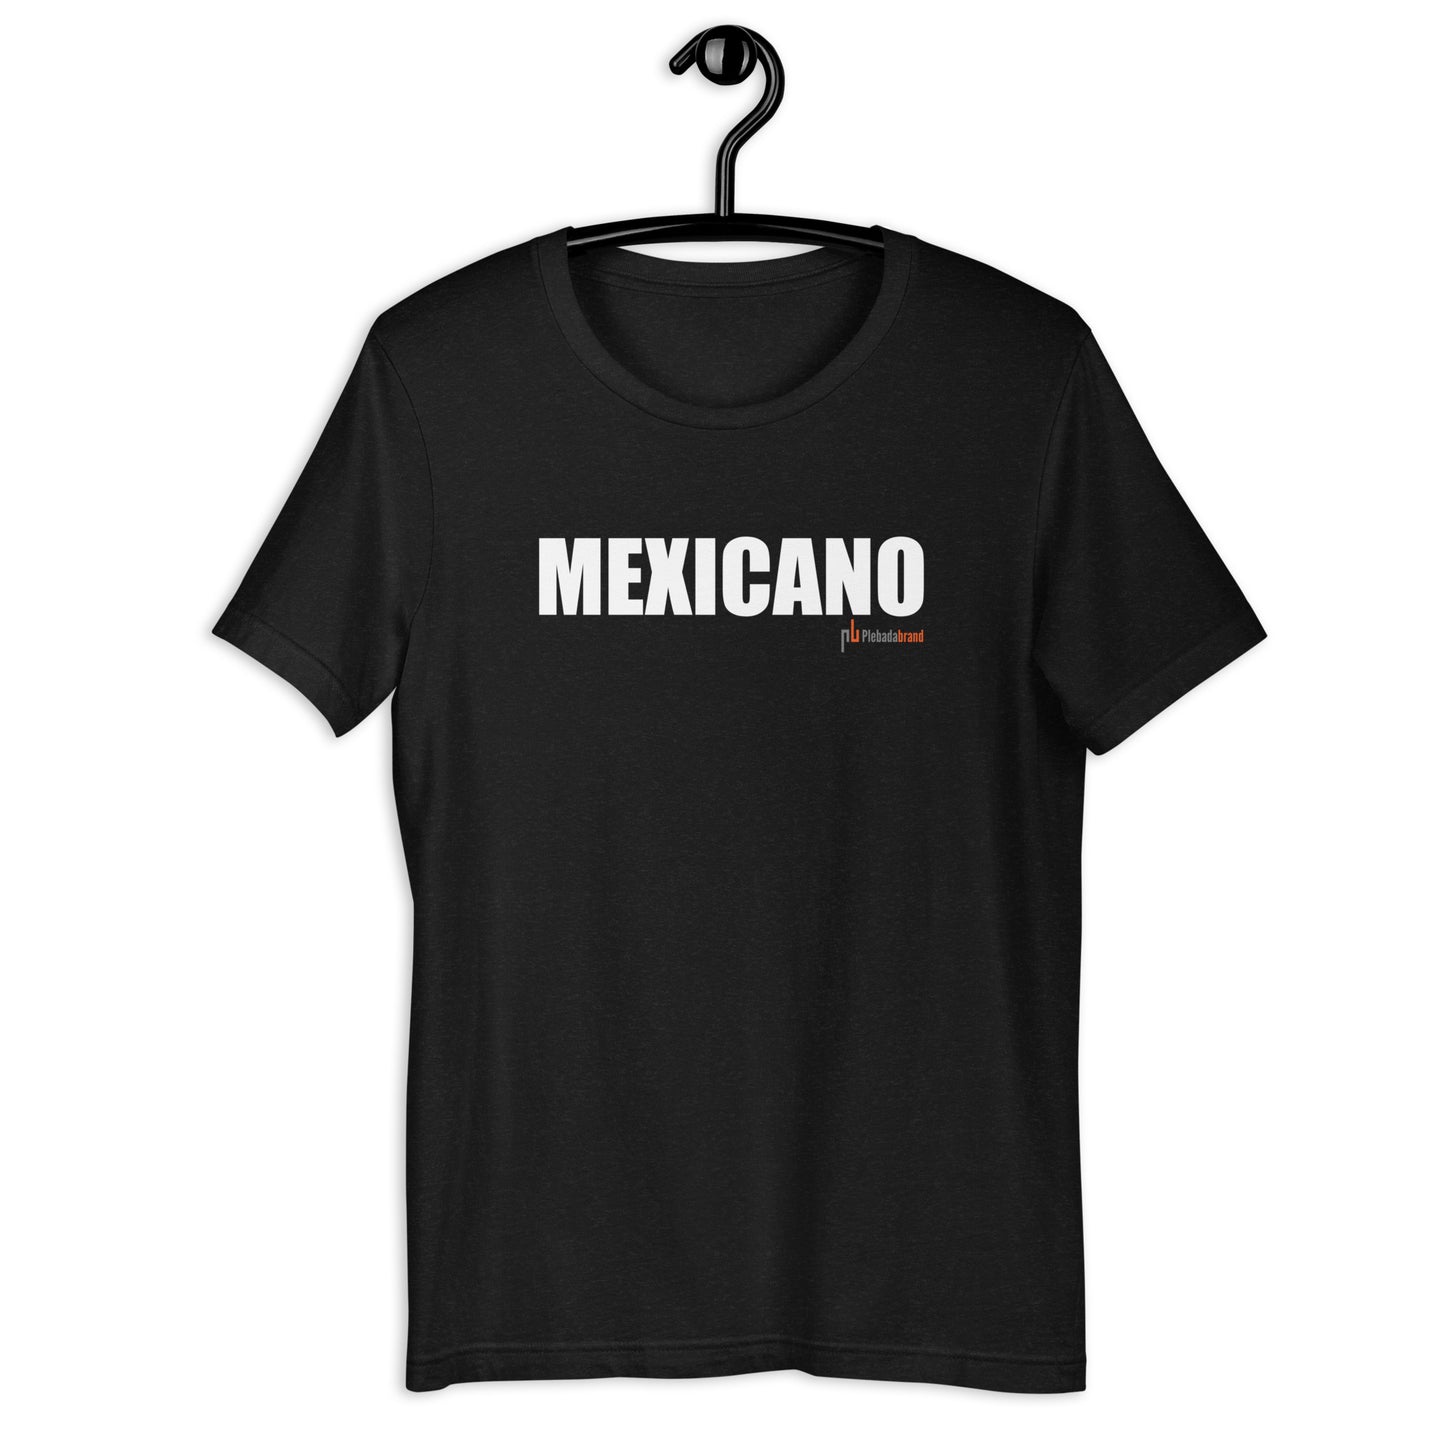 Mexicano T-shirt